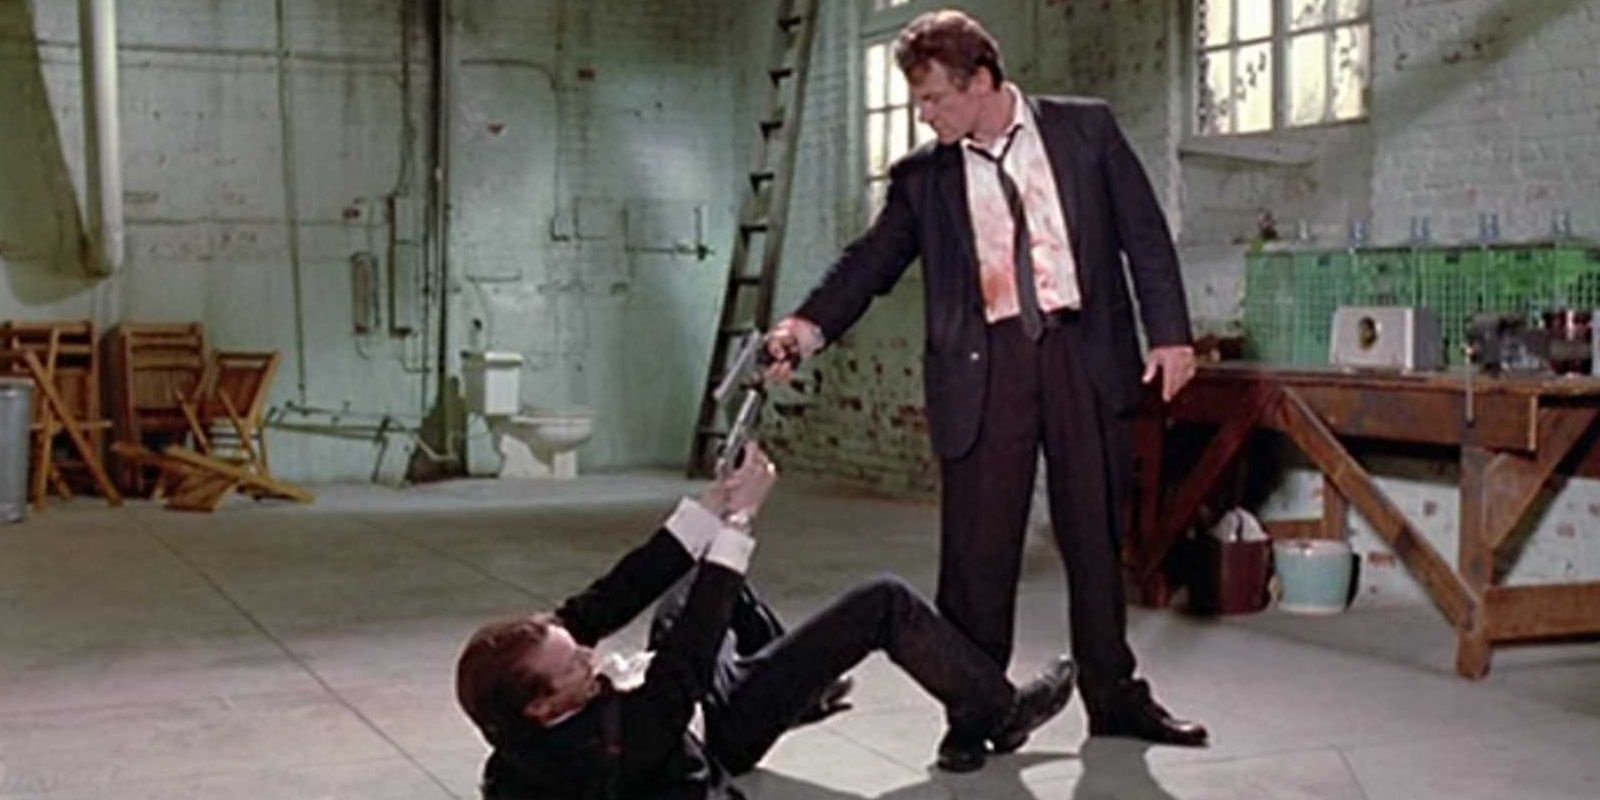 Magnet Aimant Frigo Ø38mm Film Movie Reservoir Dogs Quentin Tarantino 